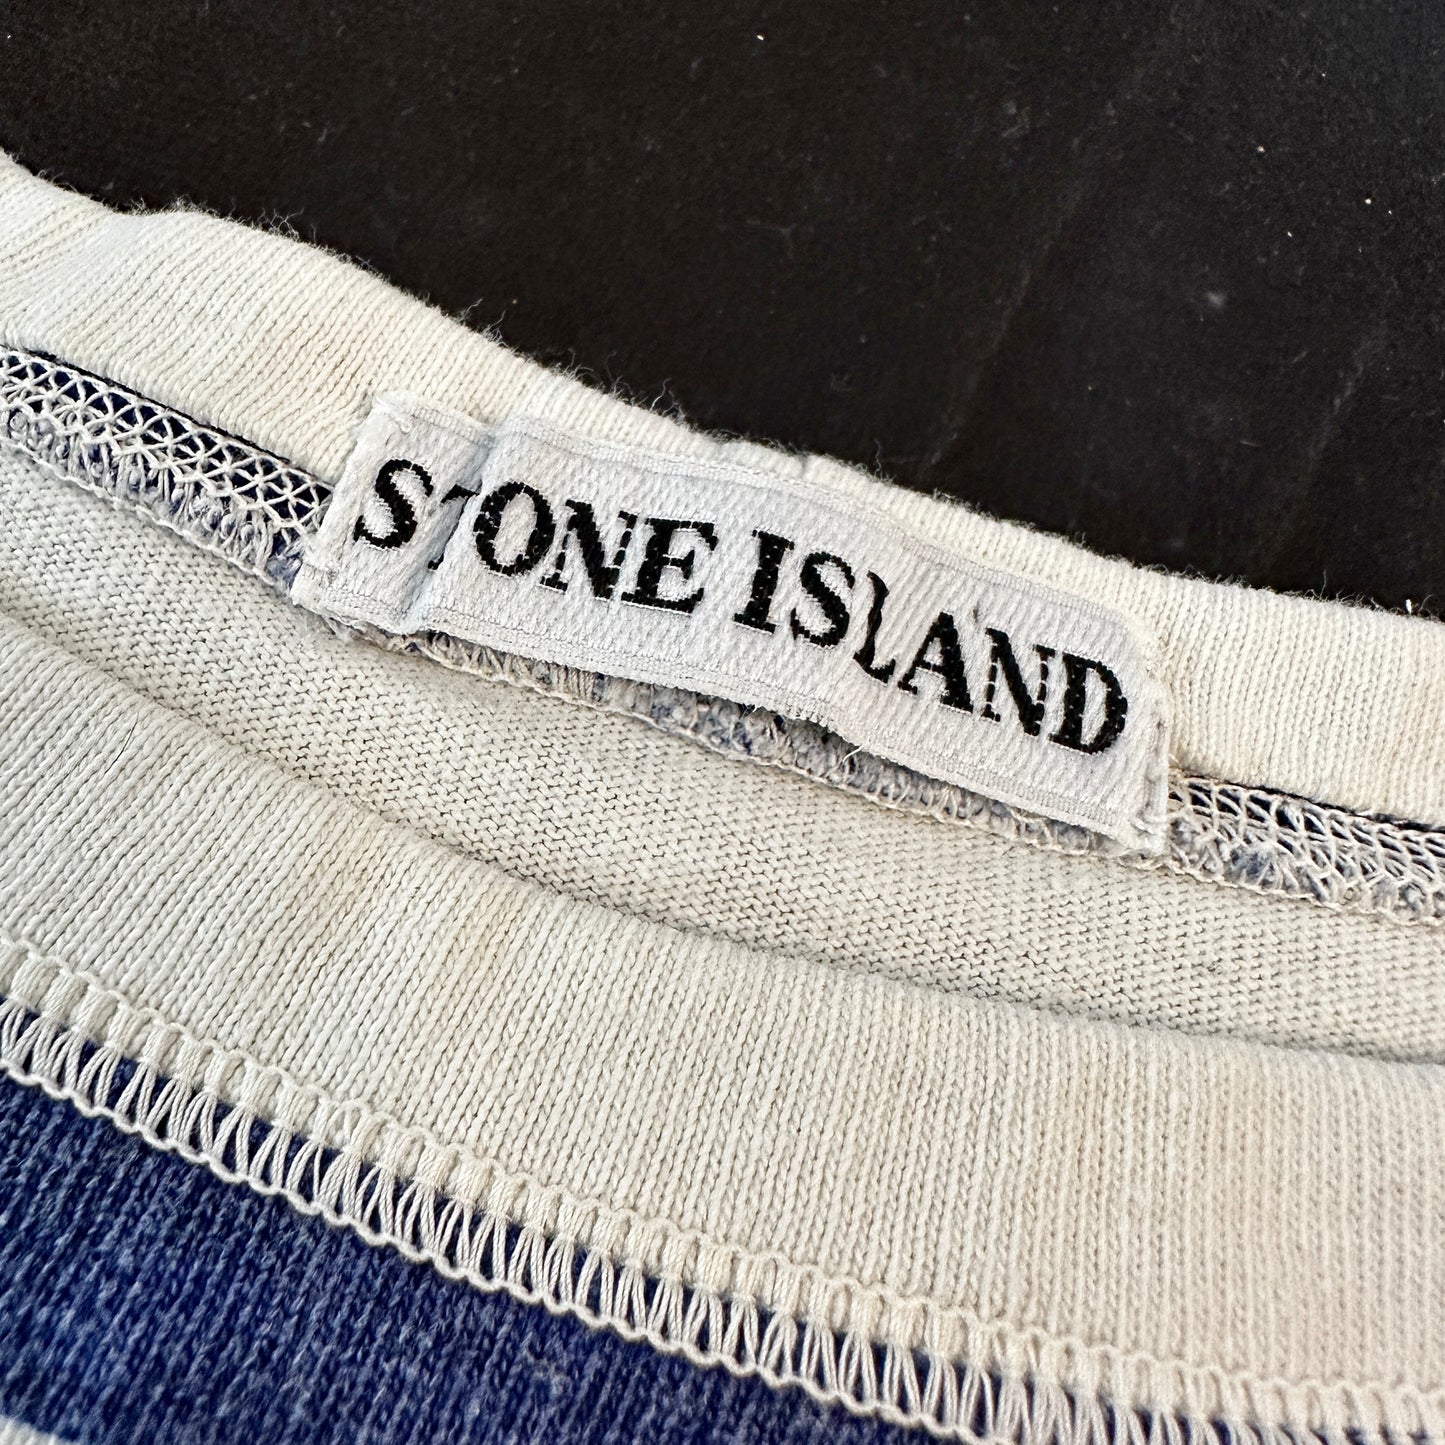 Stone Island Marina -Vintage 1987 Longsleeve T-Shirt - XL - Made in Italy